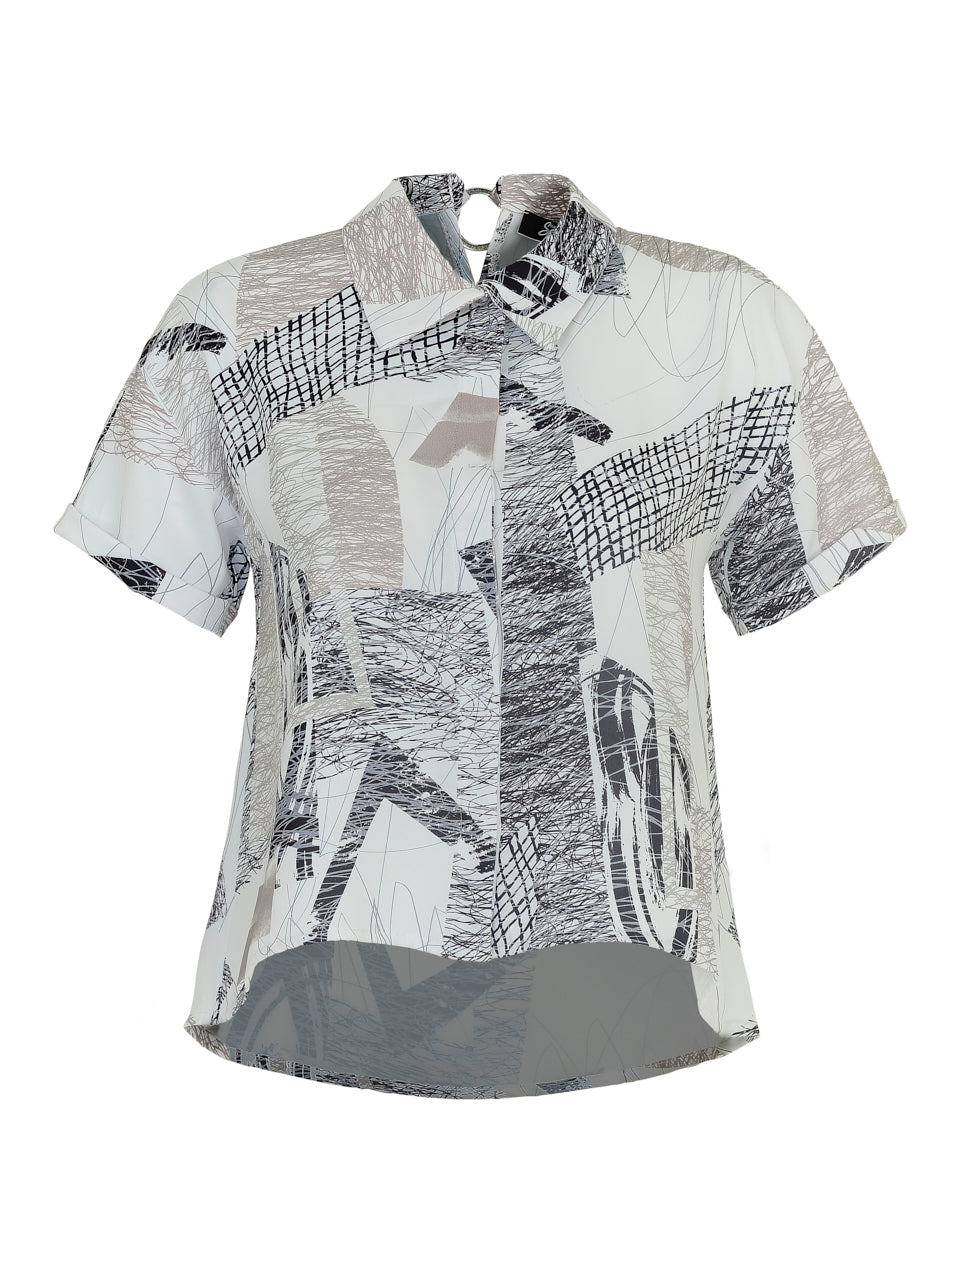 EverSassy scribble print shirt in white, product code 64052